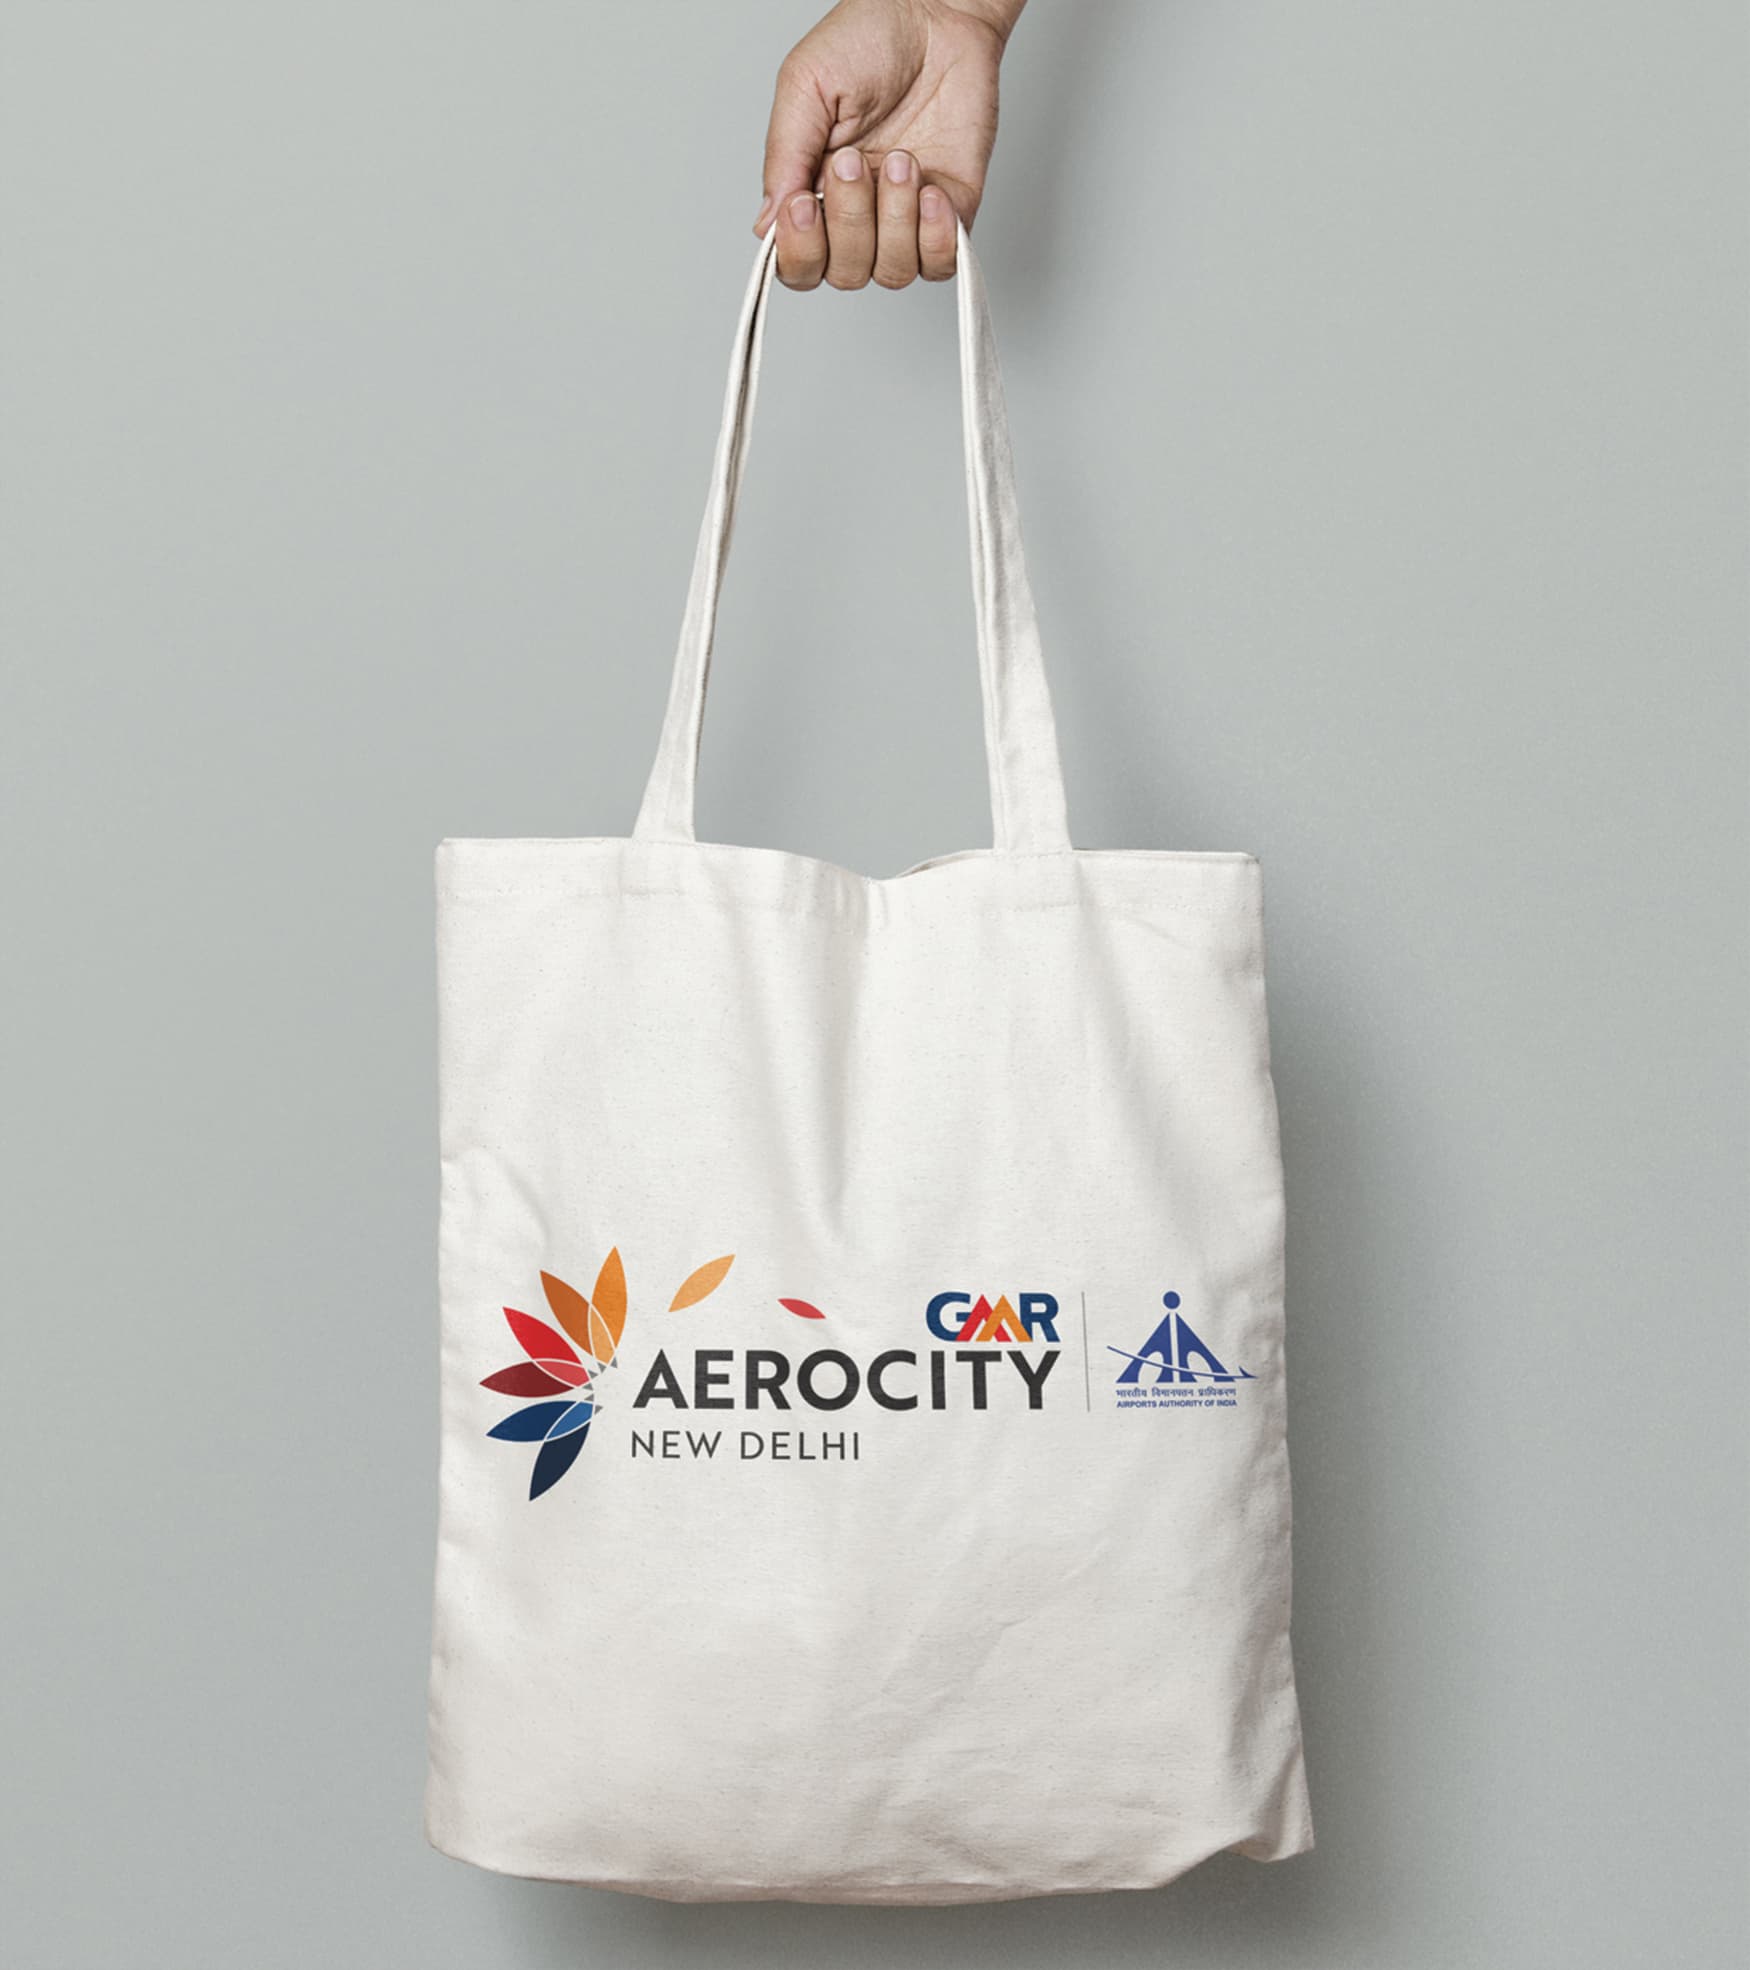 Aerocity, New Delhi, India, branded tote bag